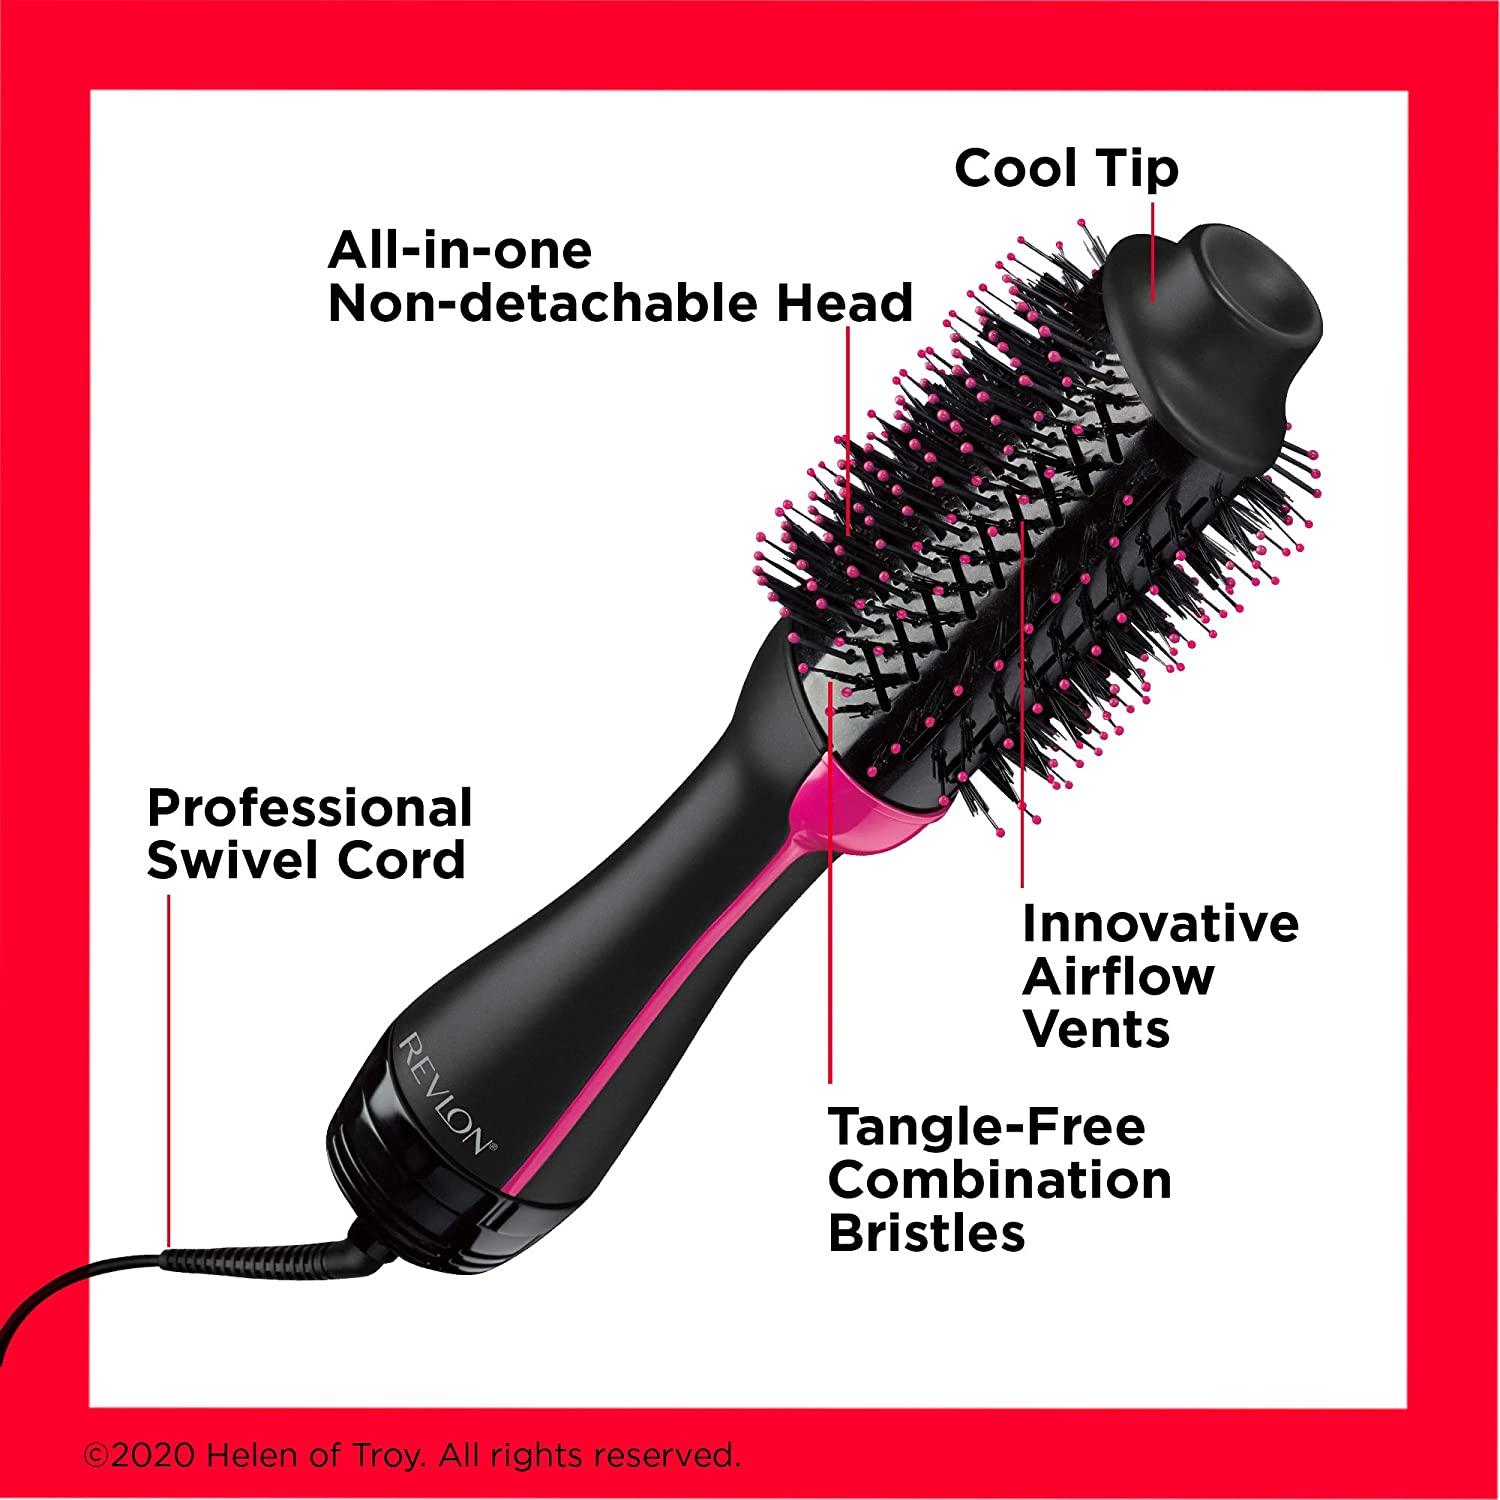 One-Step Volumizer Original 1.0 Hair Dryer and Hot Air Brush - Revlon